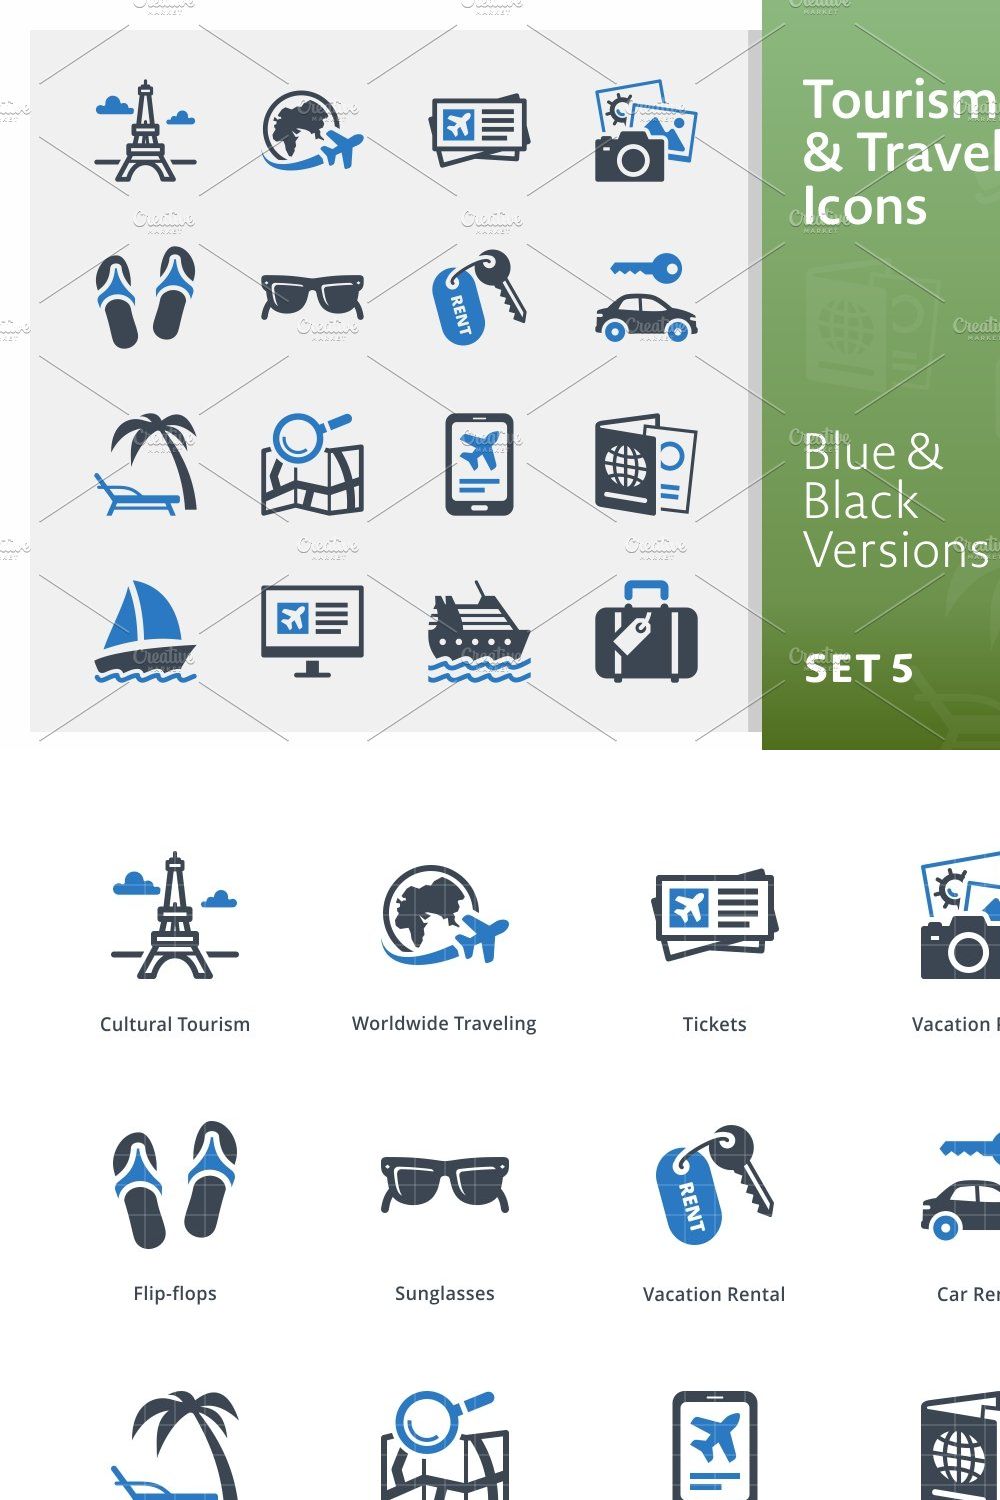 Tourism & Travel Icons Set 5 | Blue pinterest preview image.